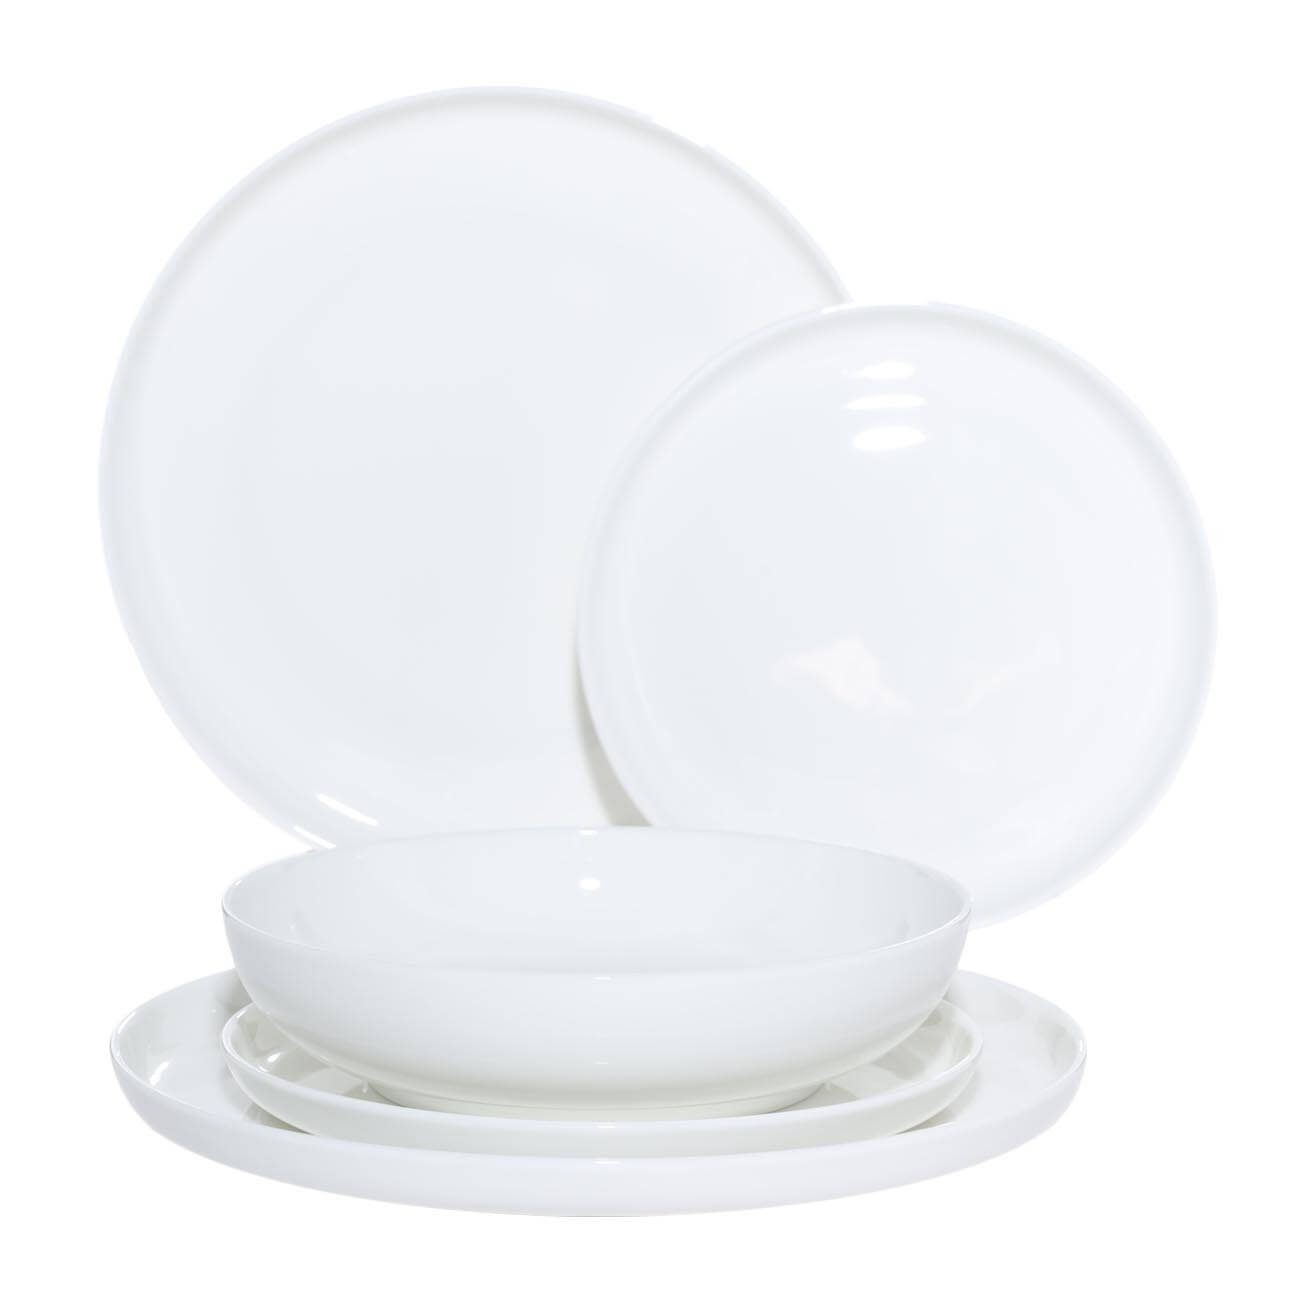 Сервиз обеденный, 6 перс, 18 пр, фарфор F, белый, Ideal white тарелка обеденная 26 см фарфор f белая ideal white